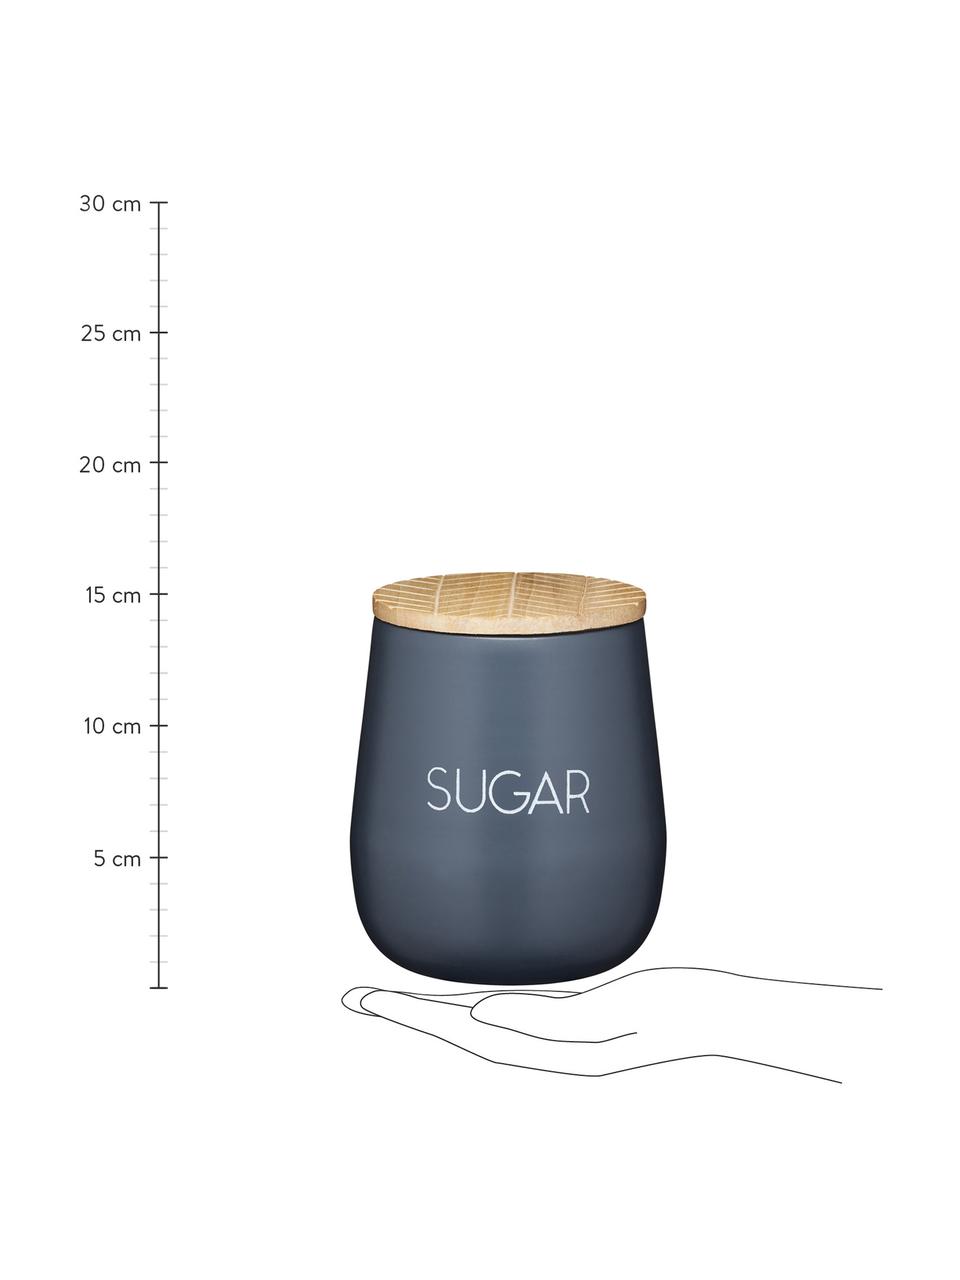 Dóza Serenity Sugar, Ø 13 cm x V 15 cm, Antracitová, dřevo, Ø 13 cm, V 15 cm, 1,6 l